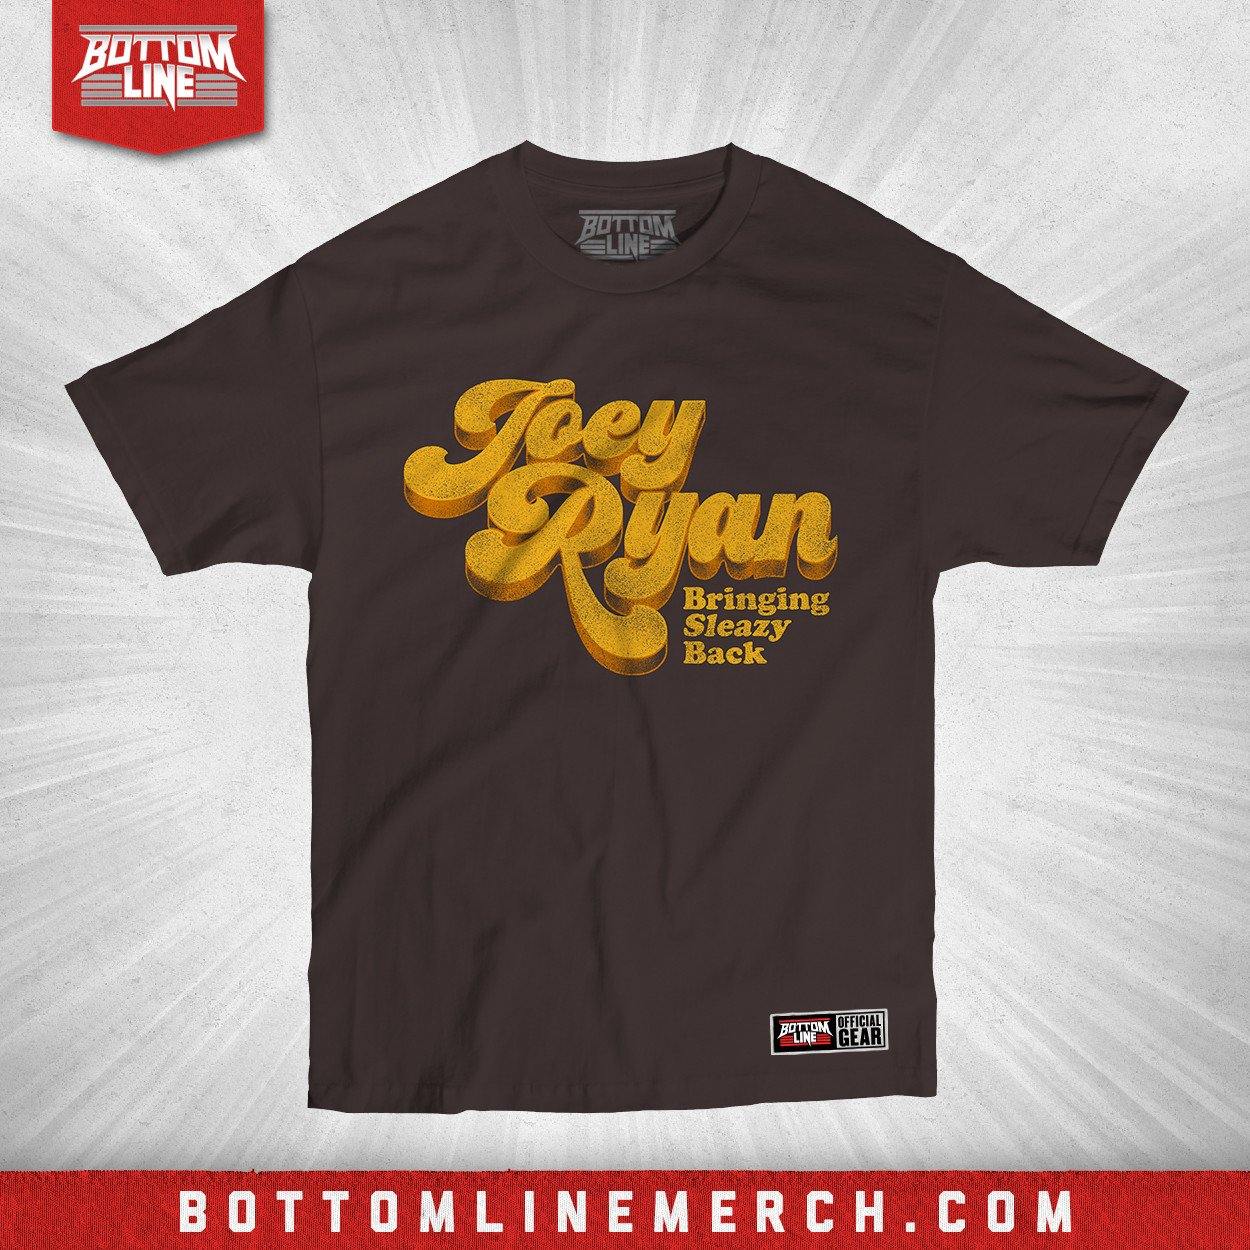 Buy Now – Joey Ryan "Bringing Sleazy Back" Shirt – Wrestler & Wrestling Merch – Bottom Line